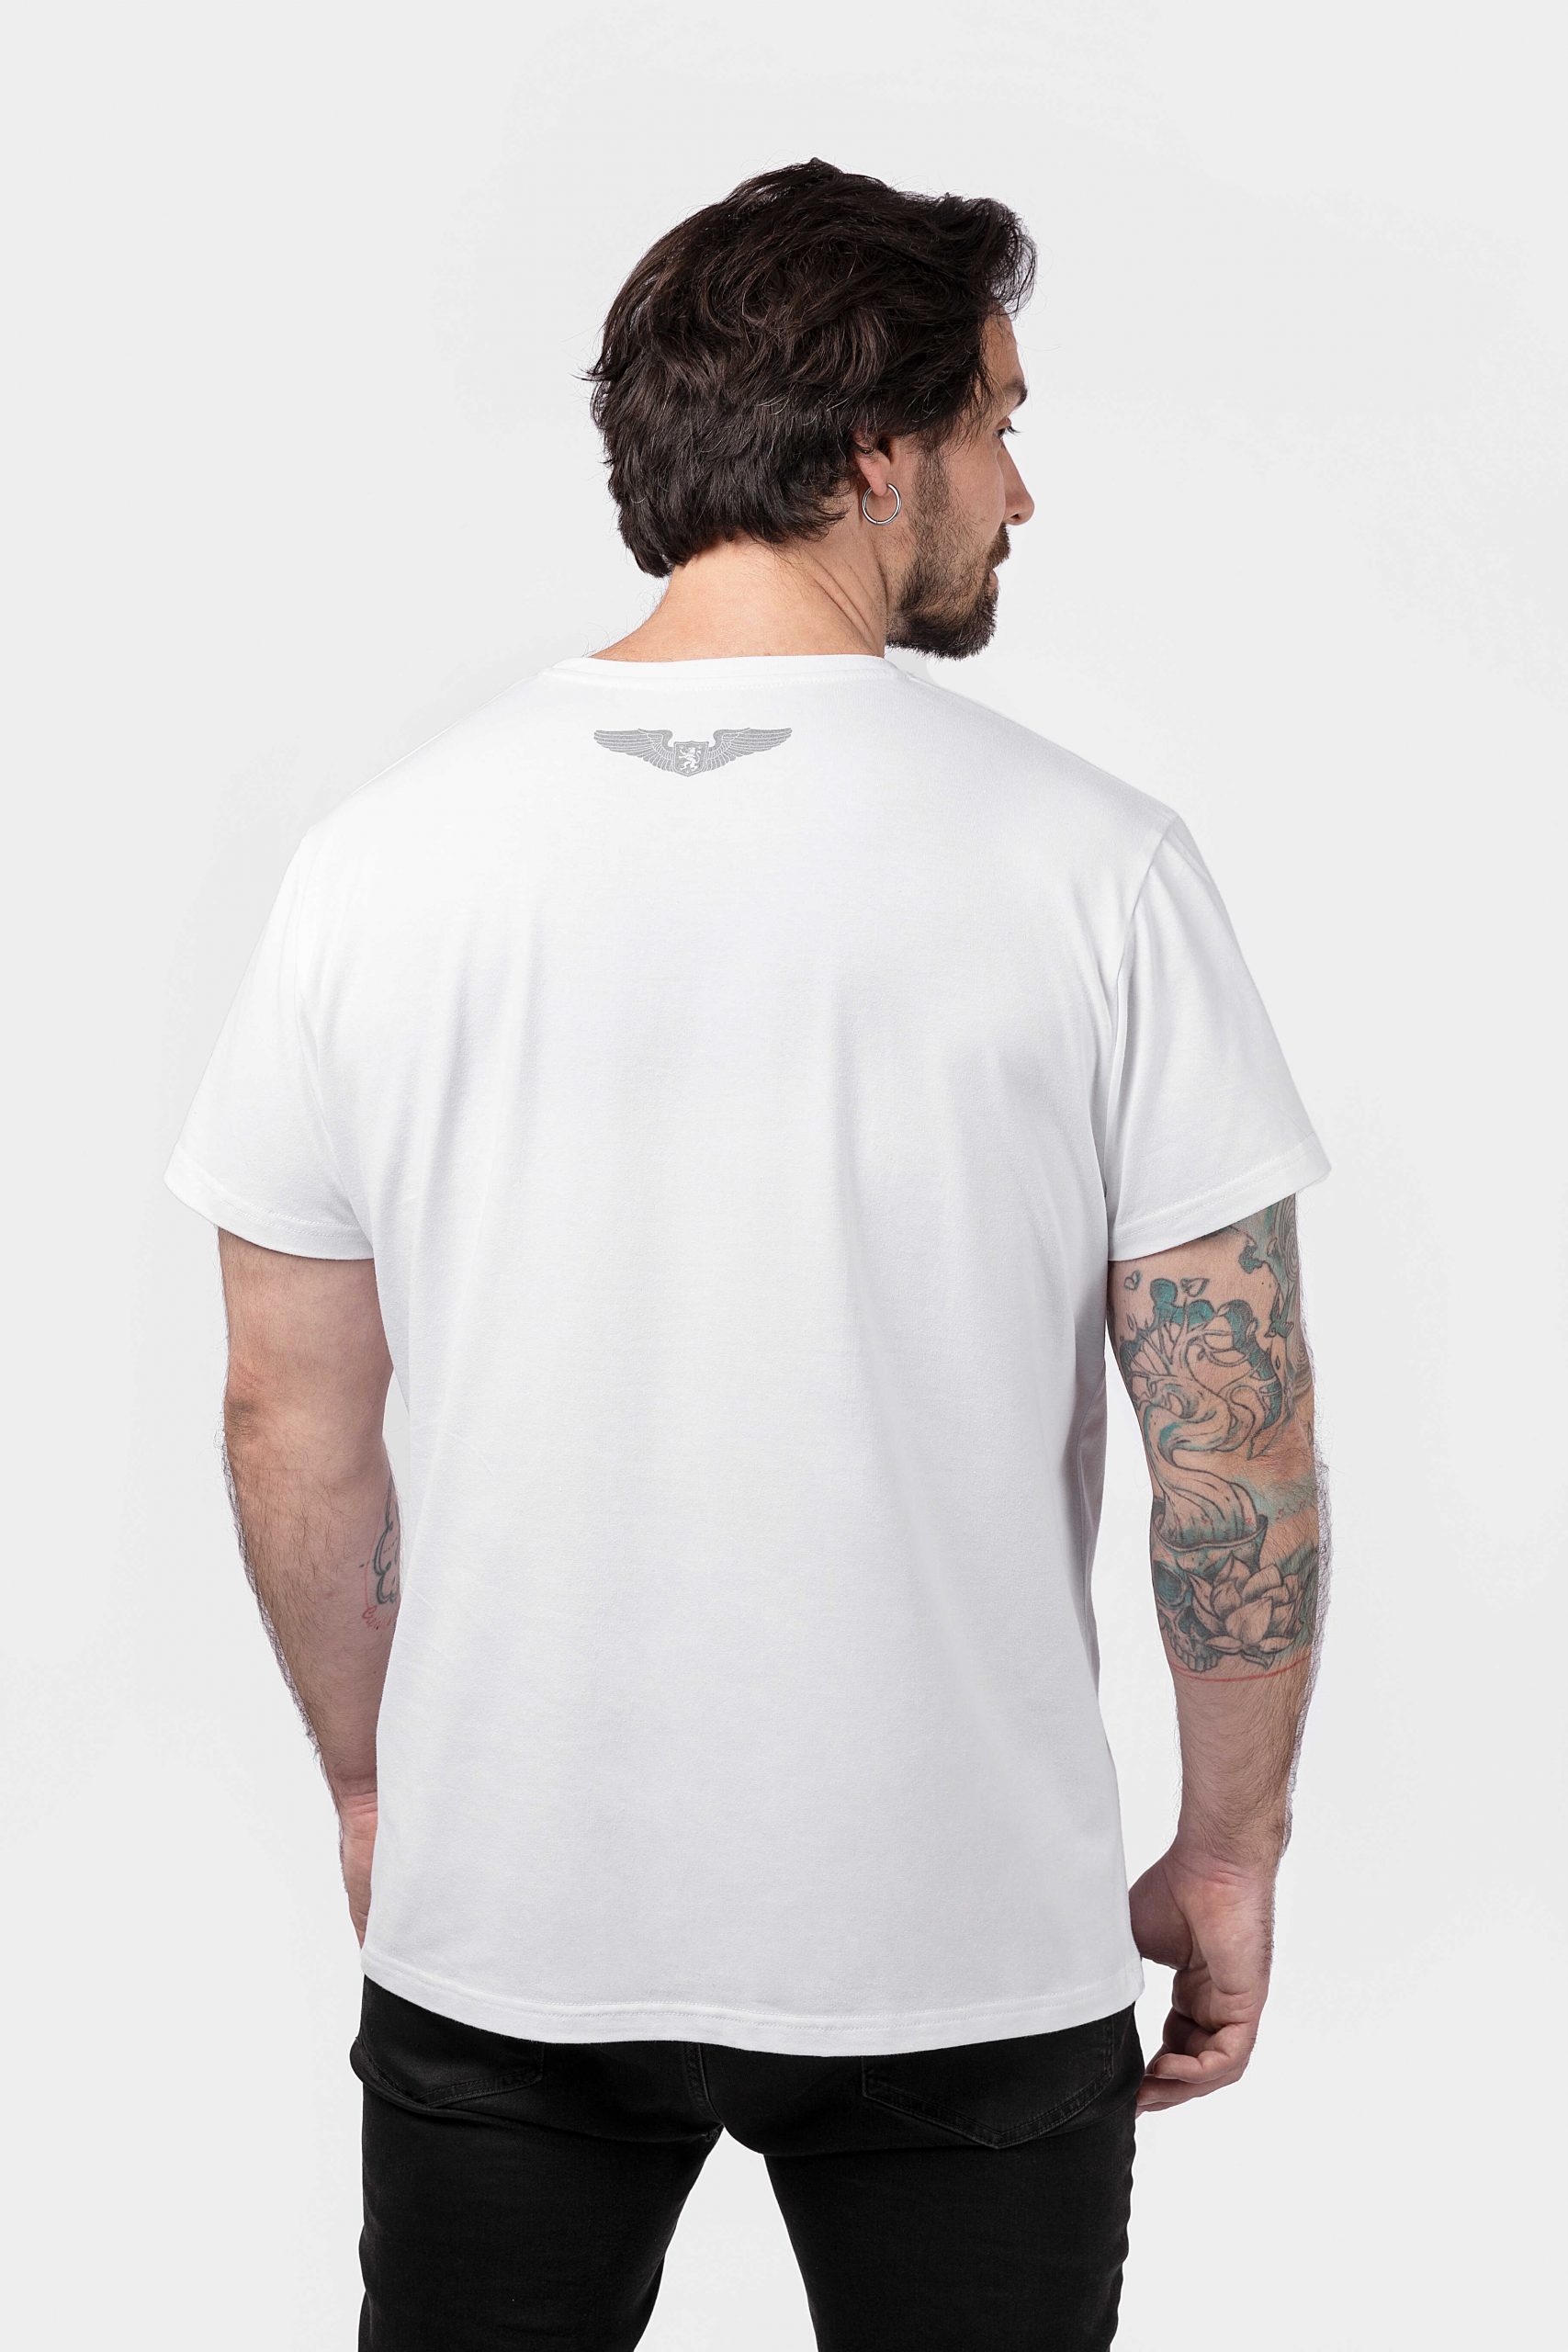 Men's T-Shirt From Ukraine With Nlaw. Color white.  Unisex T-shirt (men’s sizes).